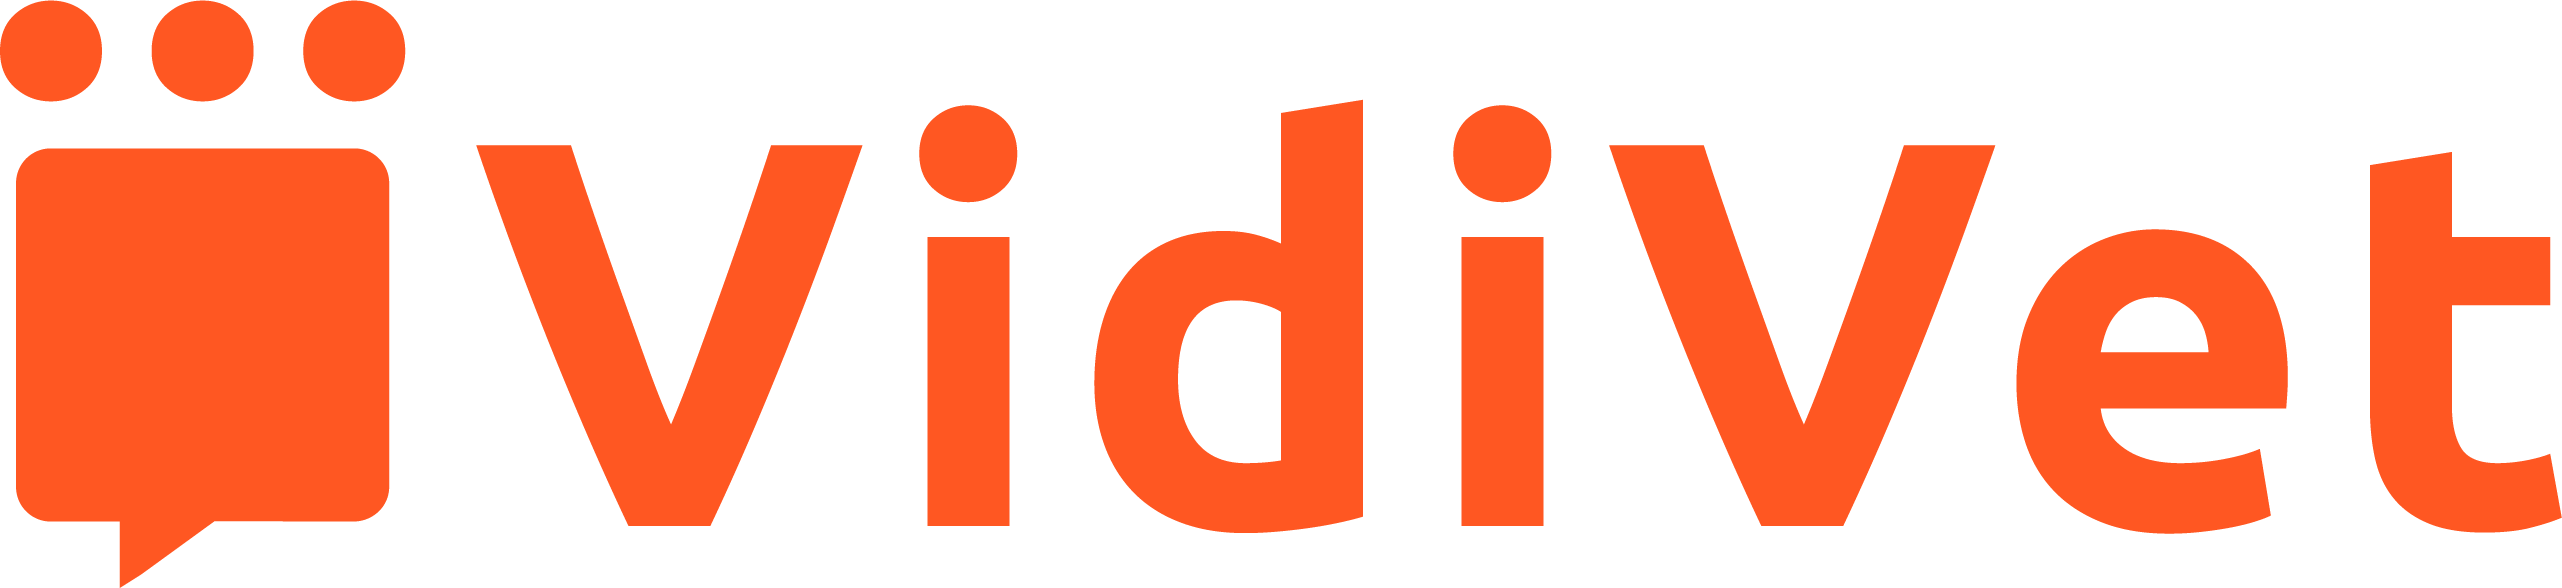 VidiVet Logo